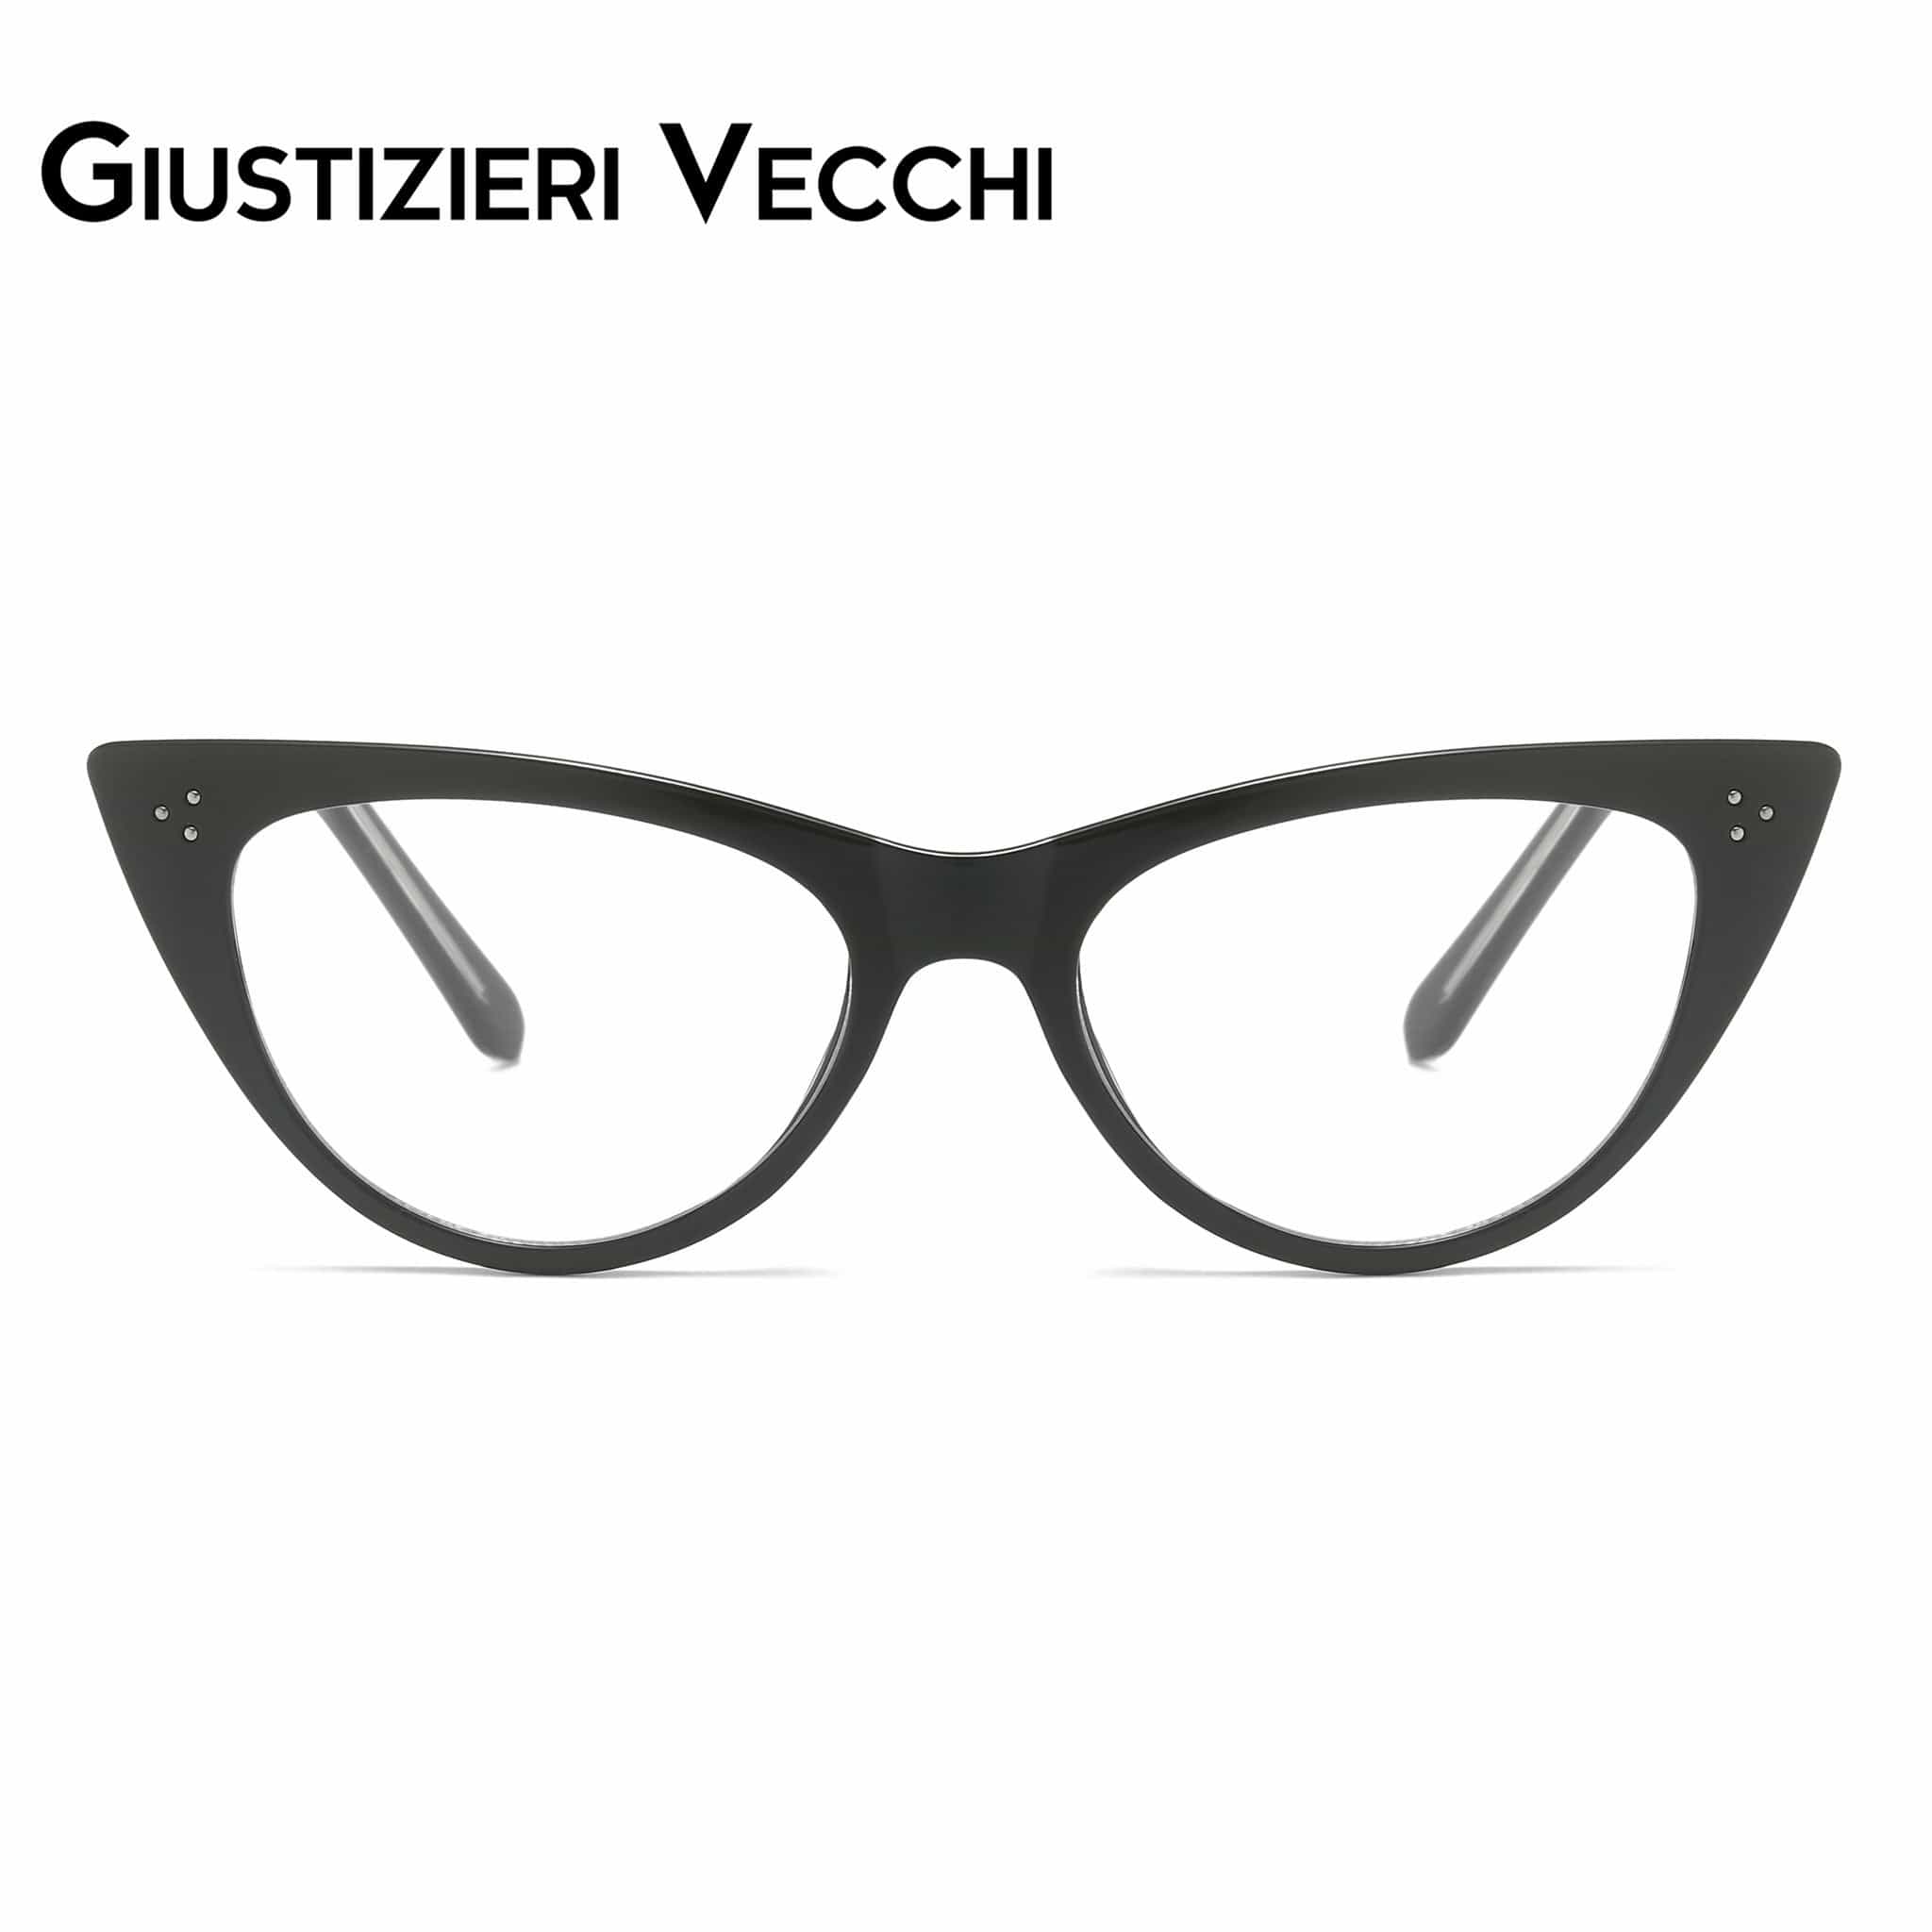 GIUSTIZIERI VECCHI Eyeglasses Medium / Black RoyalGlamour Uno